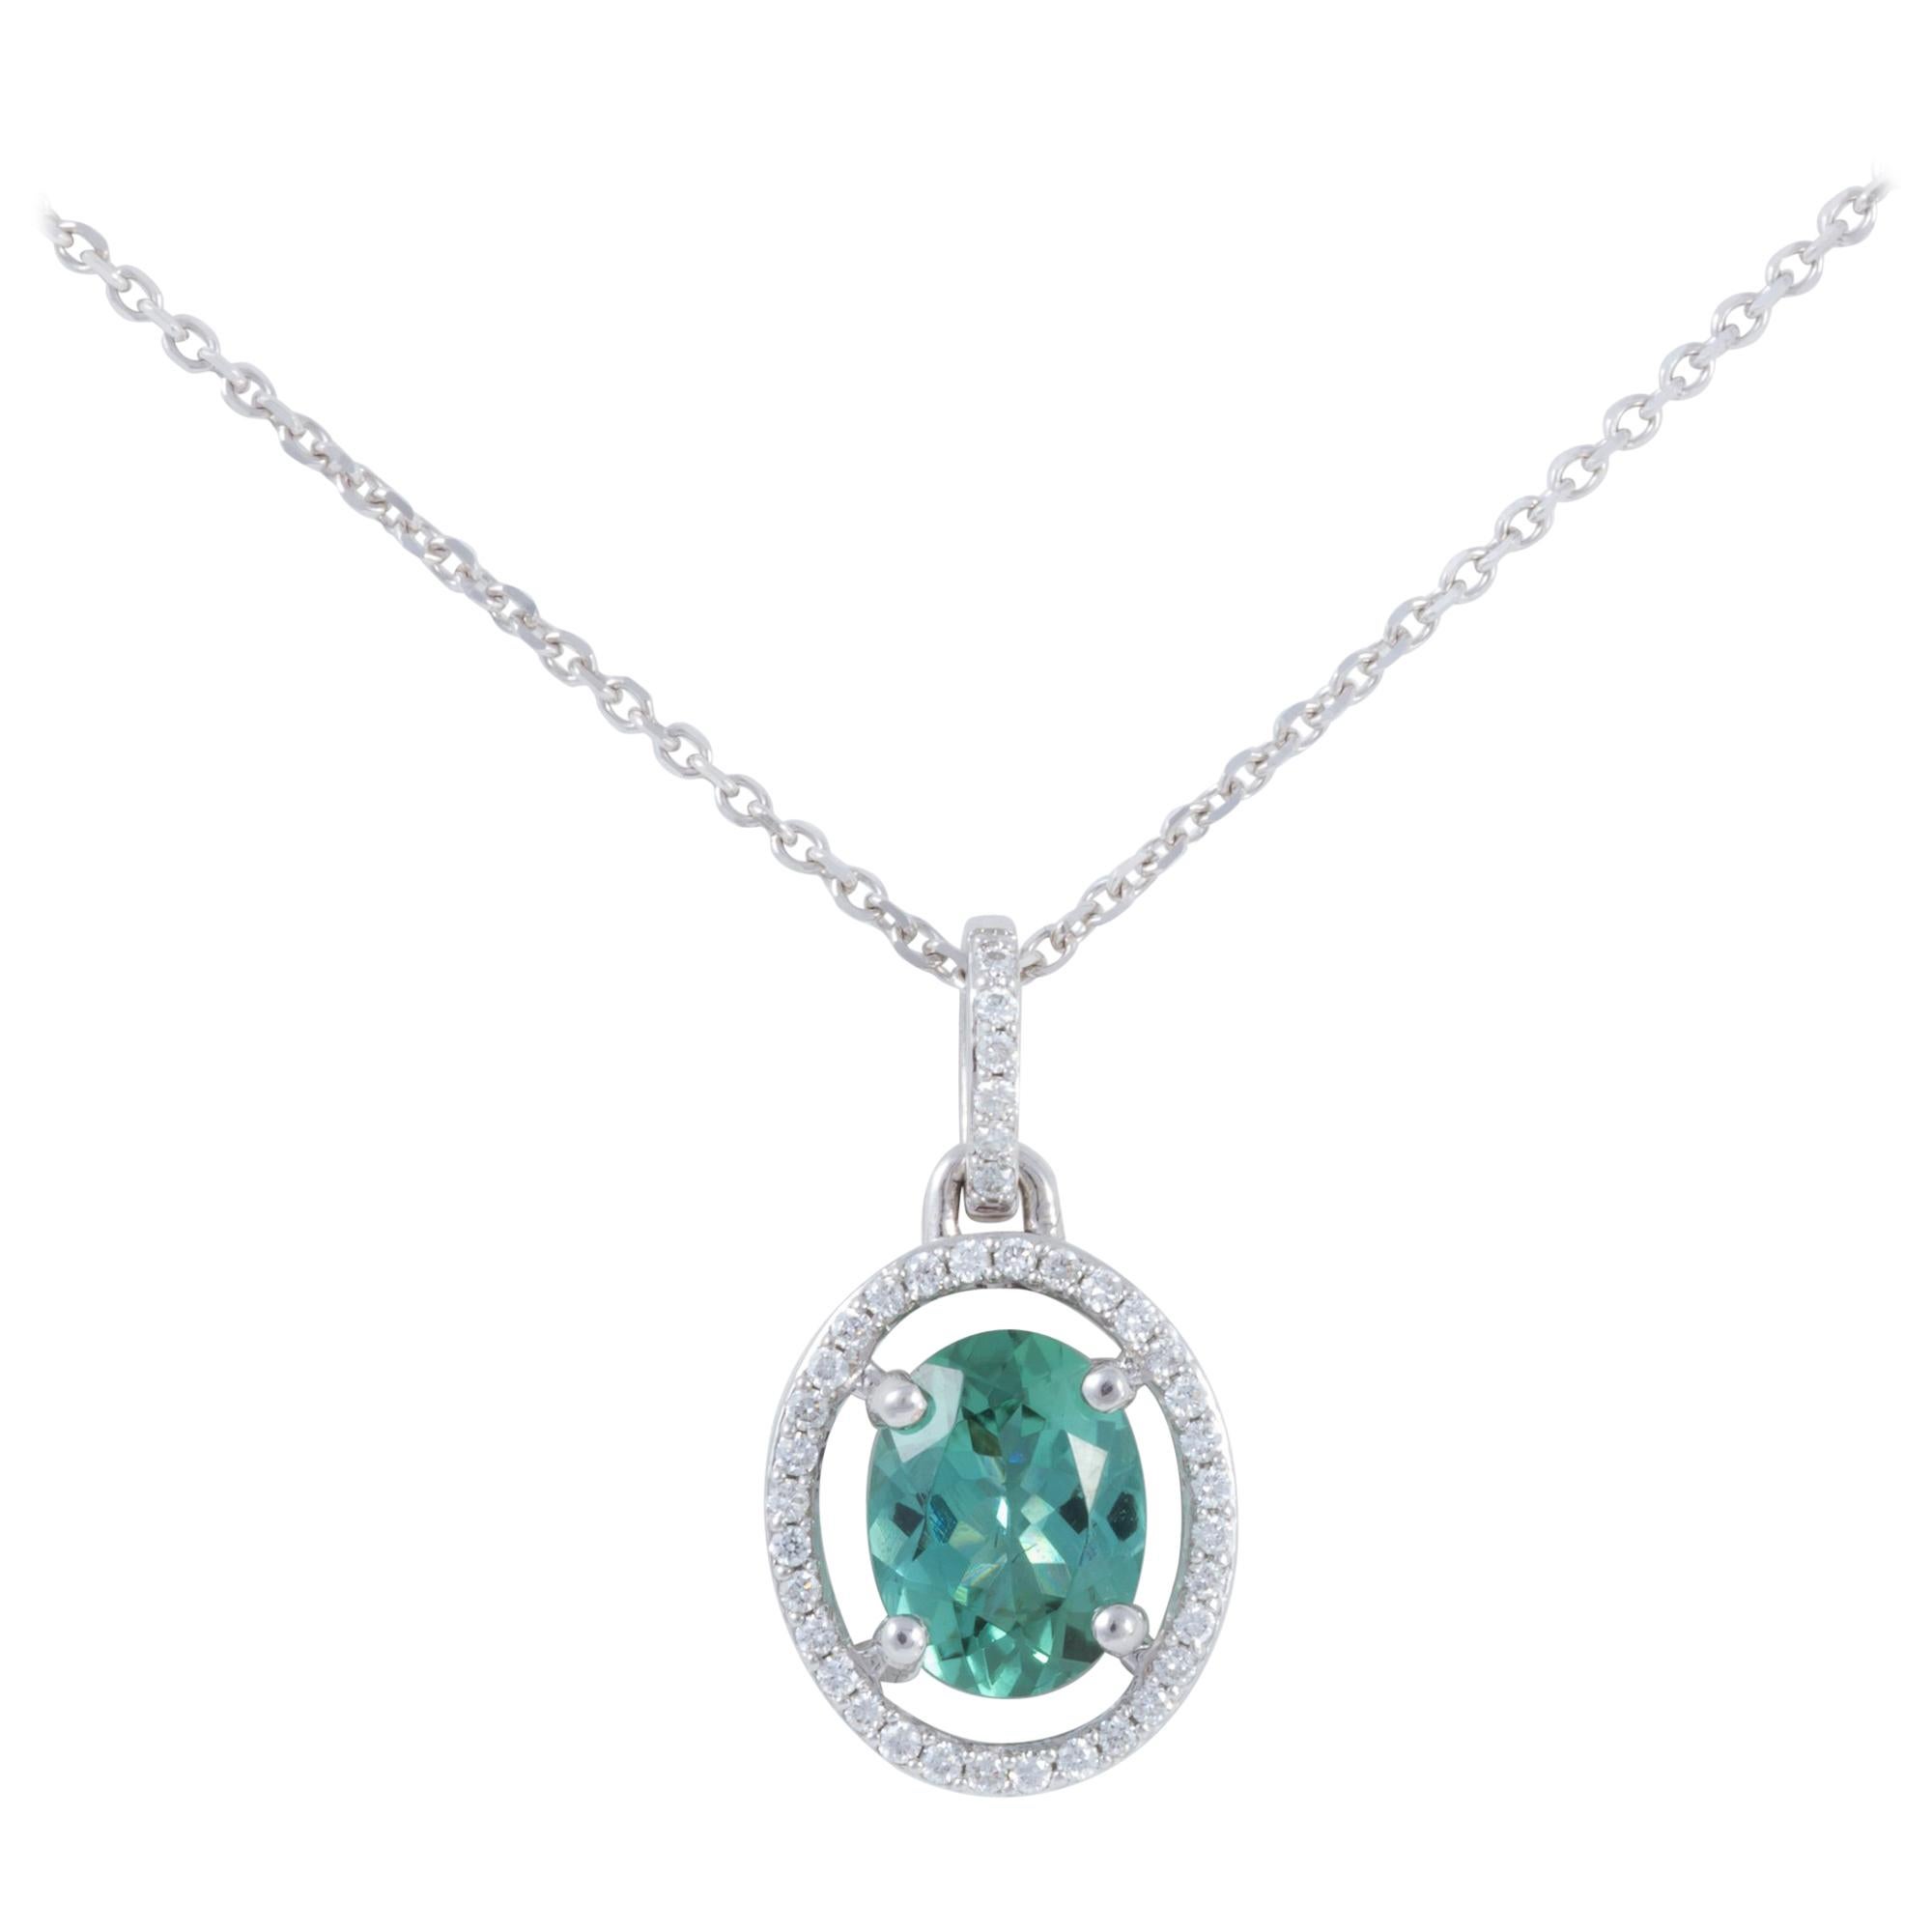 Blue Green Tourmaline & Diamond Pendant Necklace in 14 kt White Gold